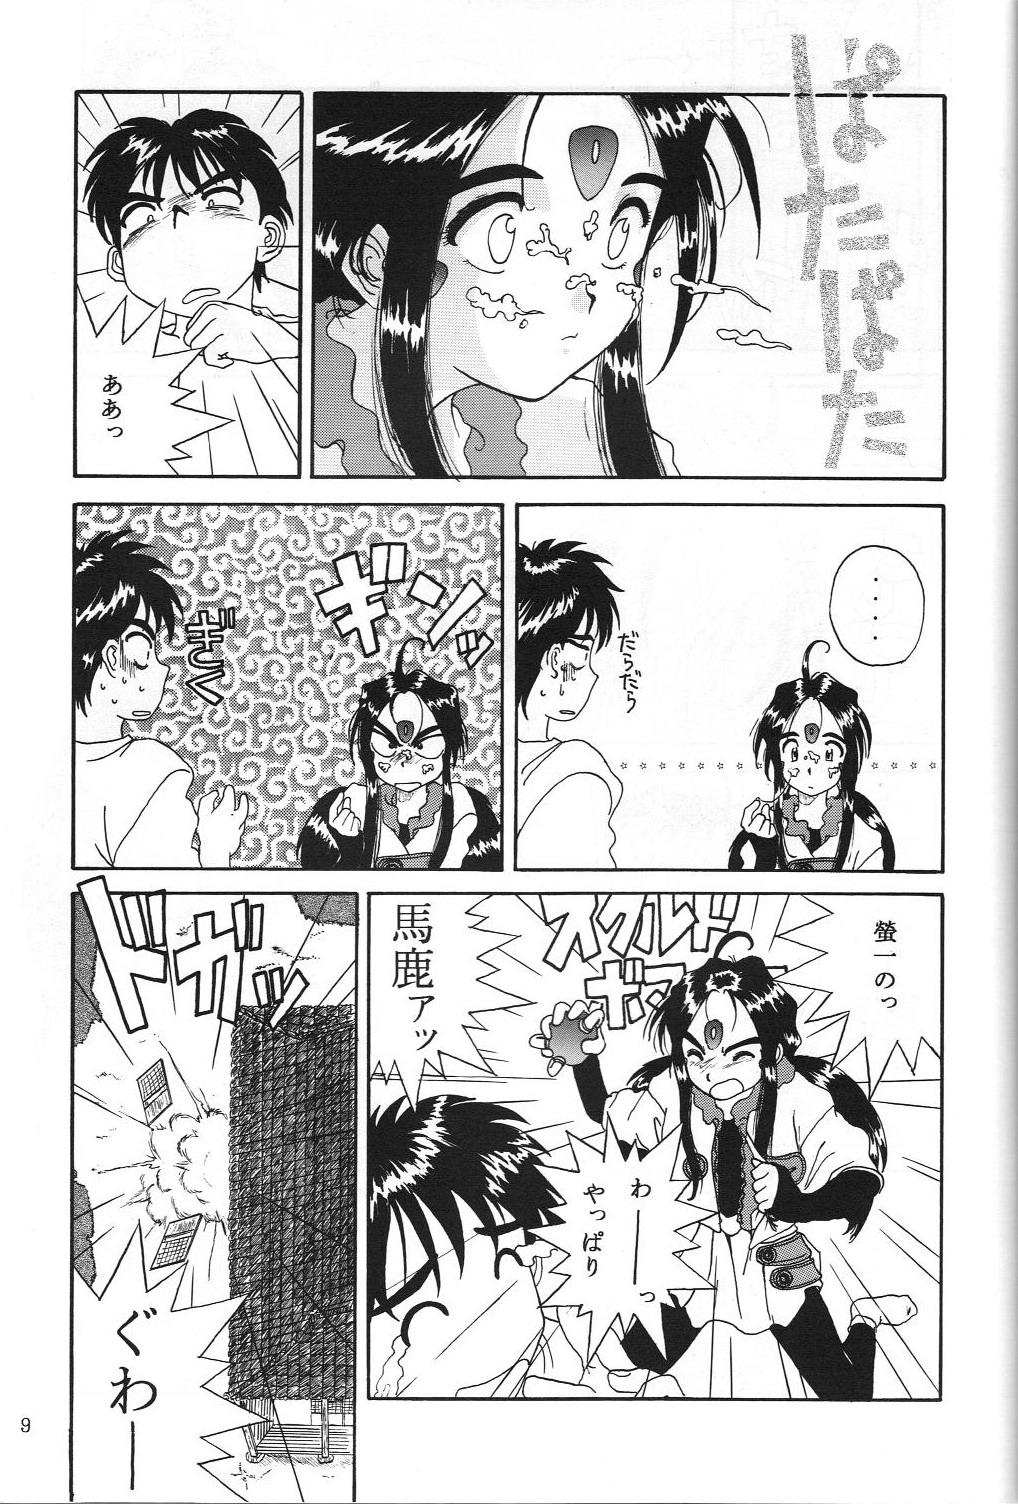 Extreme THE SECRET OF Chimatsuriya Vol. 5 - Ah my goddess Club - Page 8